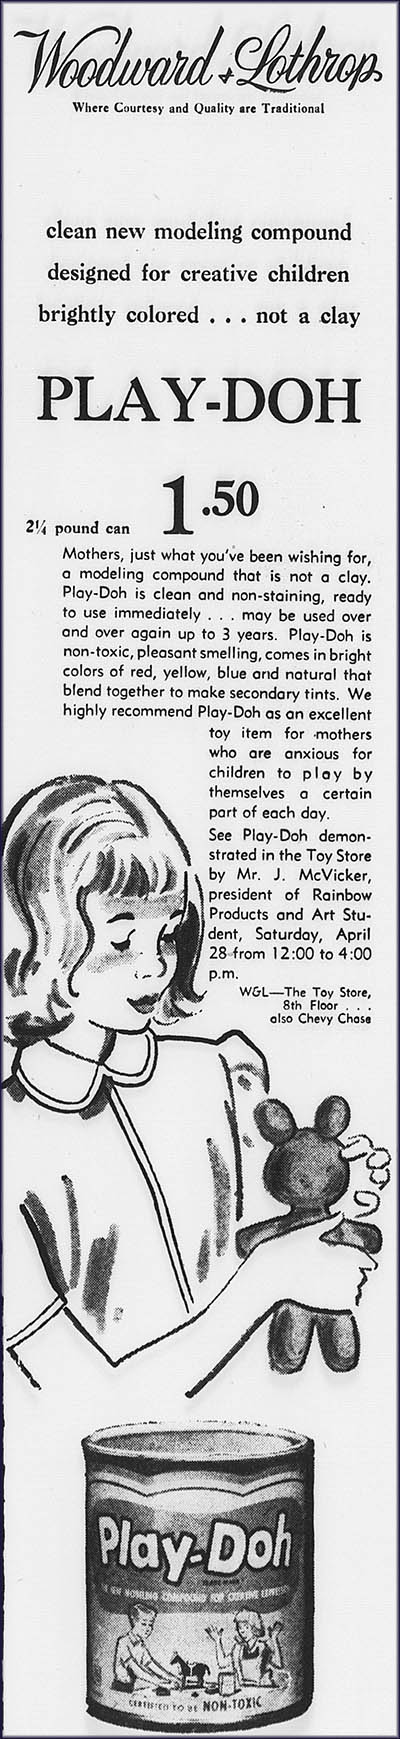 Play-Doh ad. Evening Star (Washington, D.C.). May 27, 1956.  